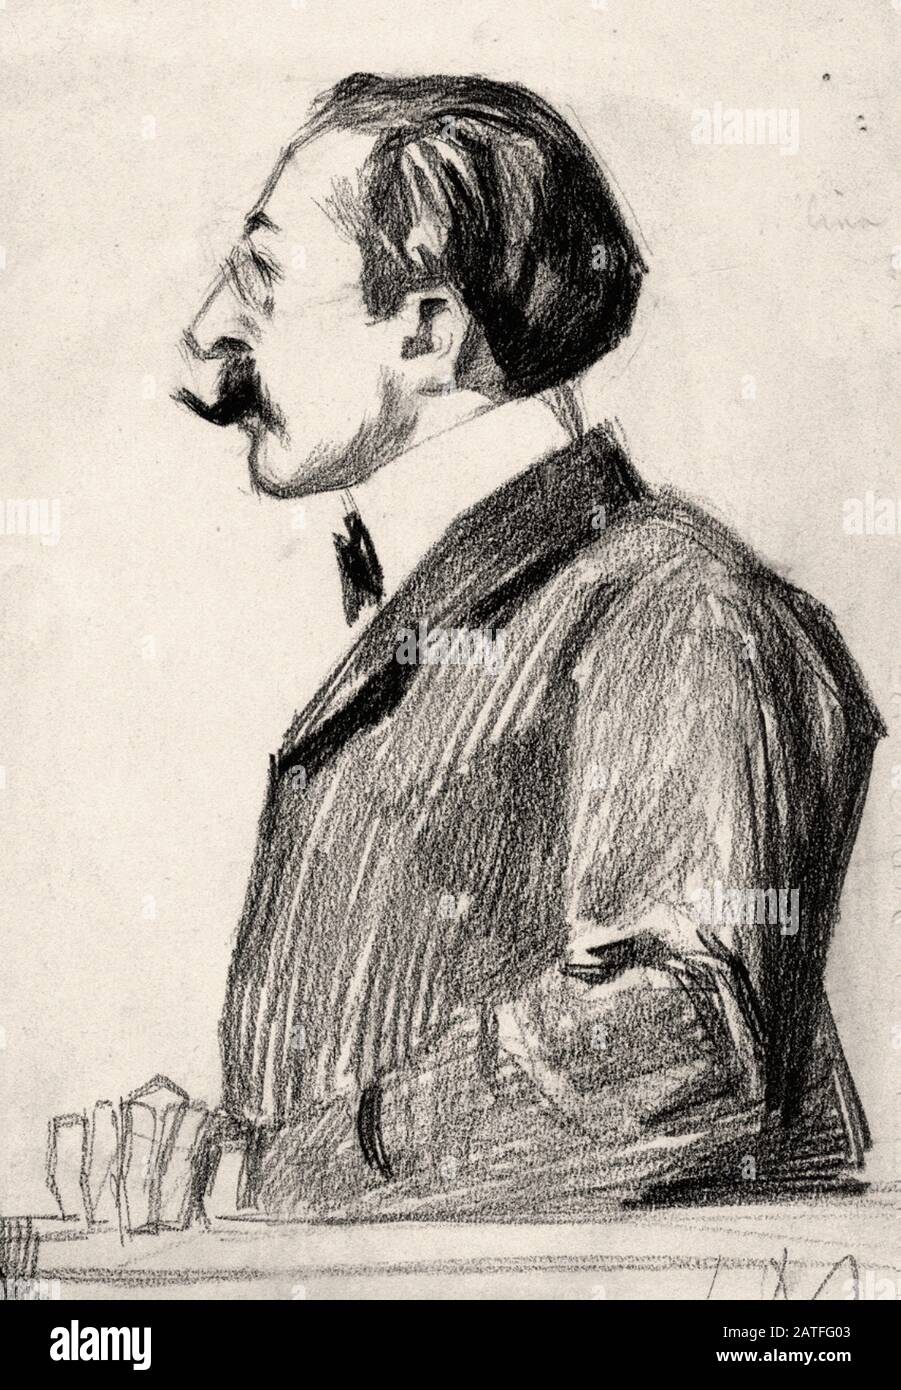 The Dreyfus Affair 1894-1906 -   Louis Dreyfus  - court drawing Stock Photo